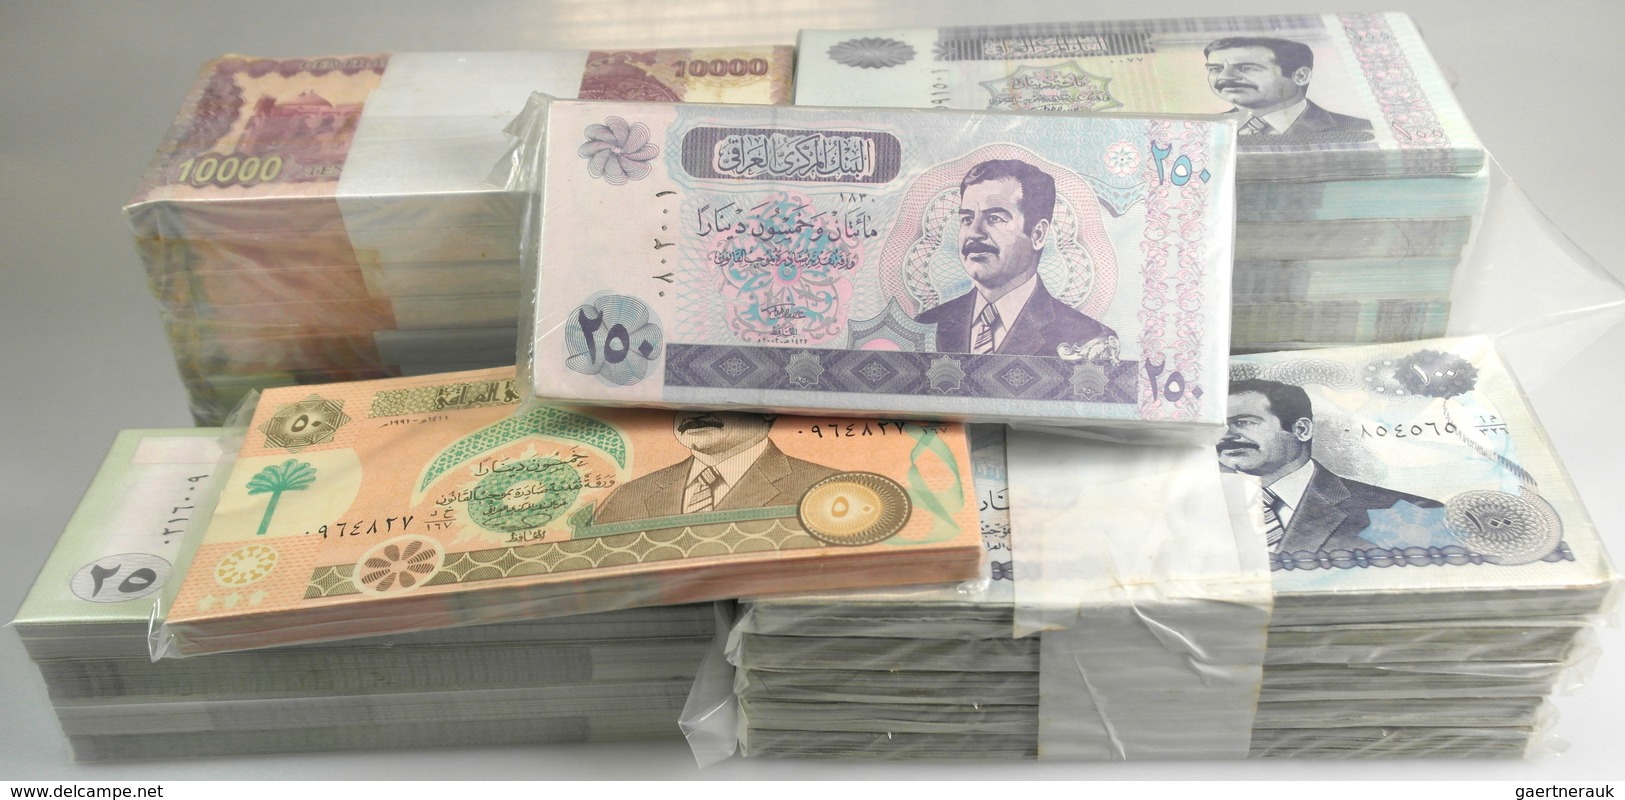 02793 Iraq / Irak: Giant Set With 8000 Banknotes In 8 Bricks Saddam Hussein Issue Containing 1000 Pcs. 50 - Irak